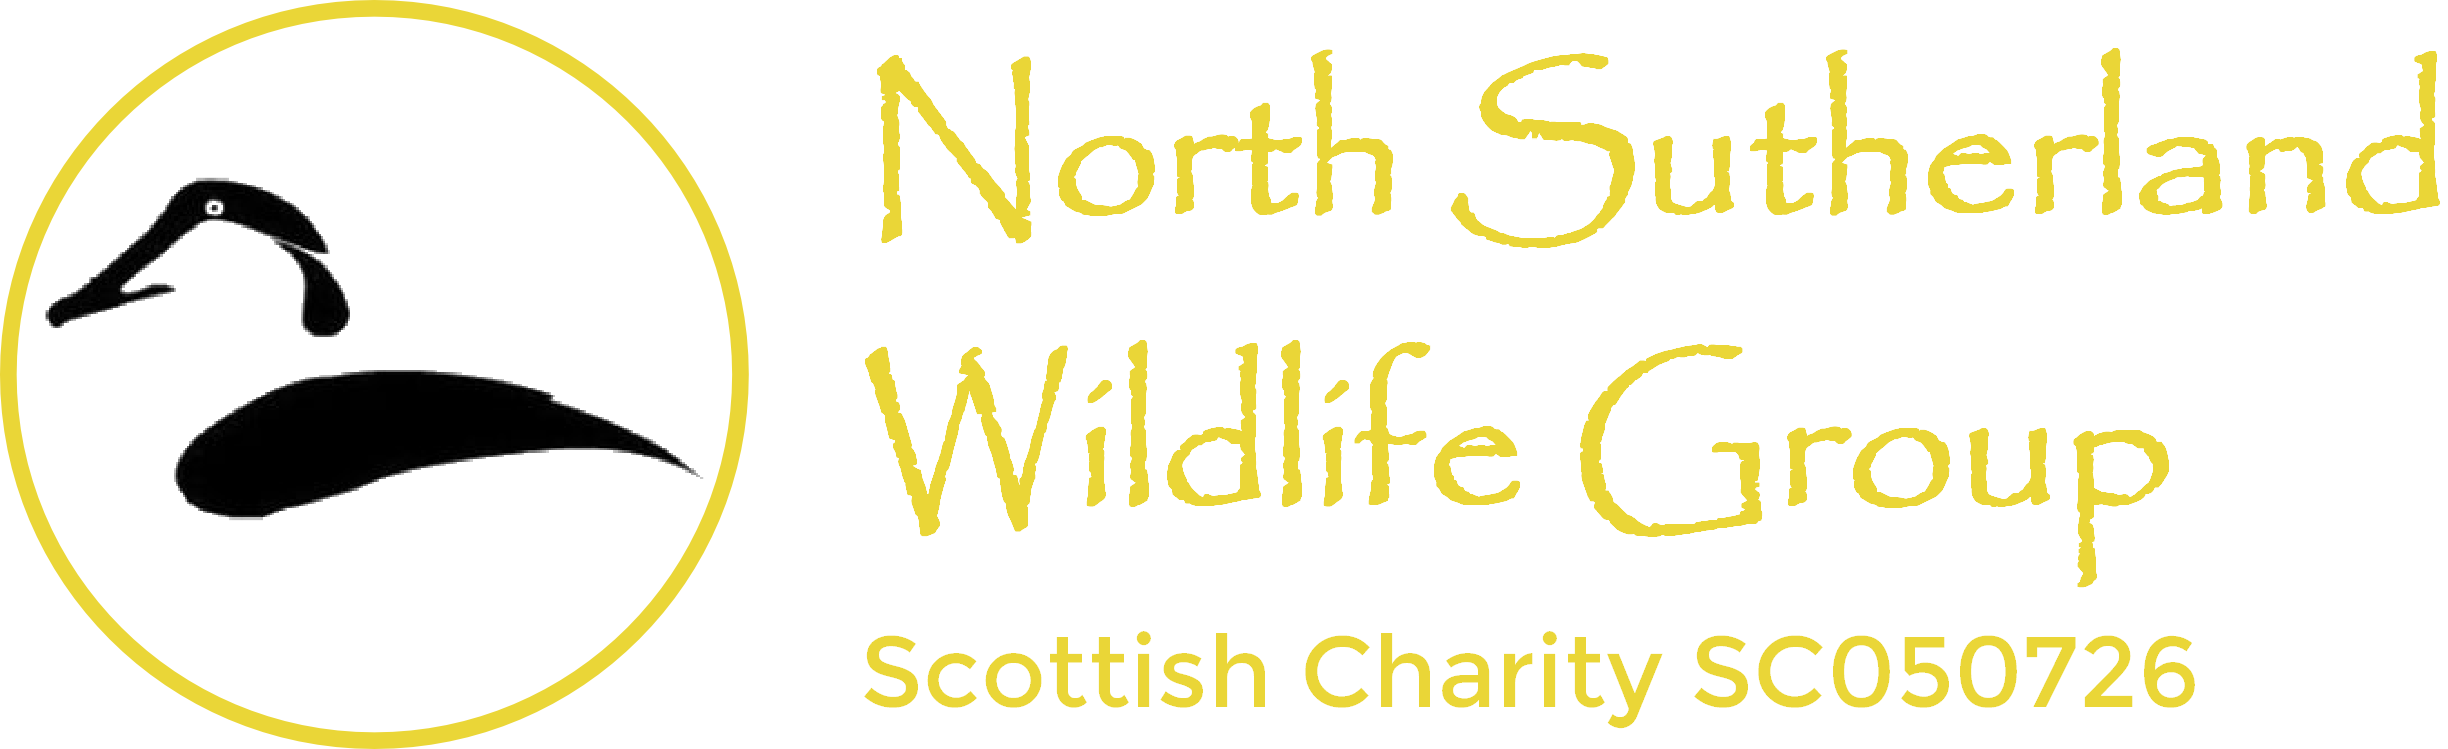 North Sutherland Wildlife Group